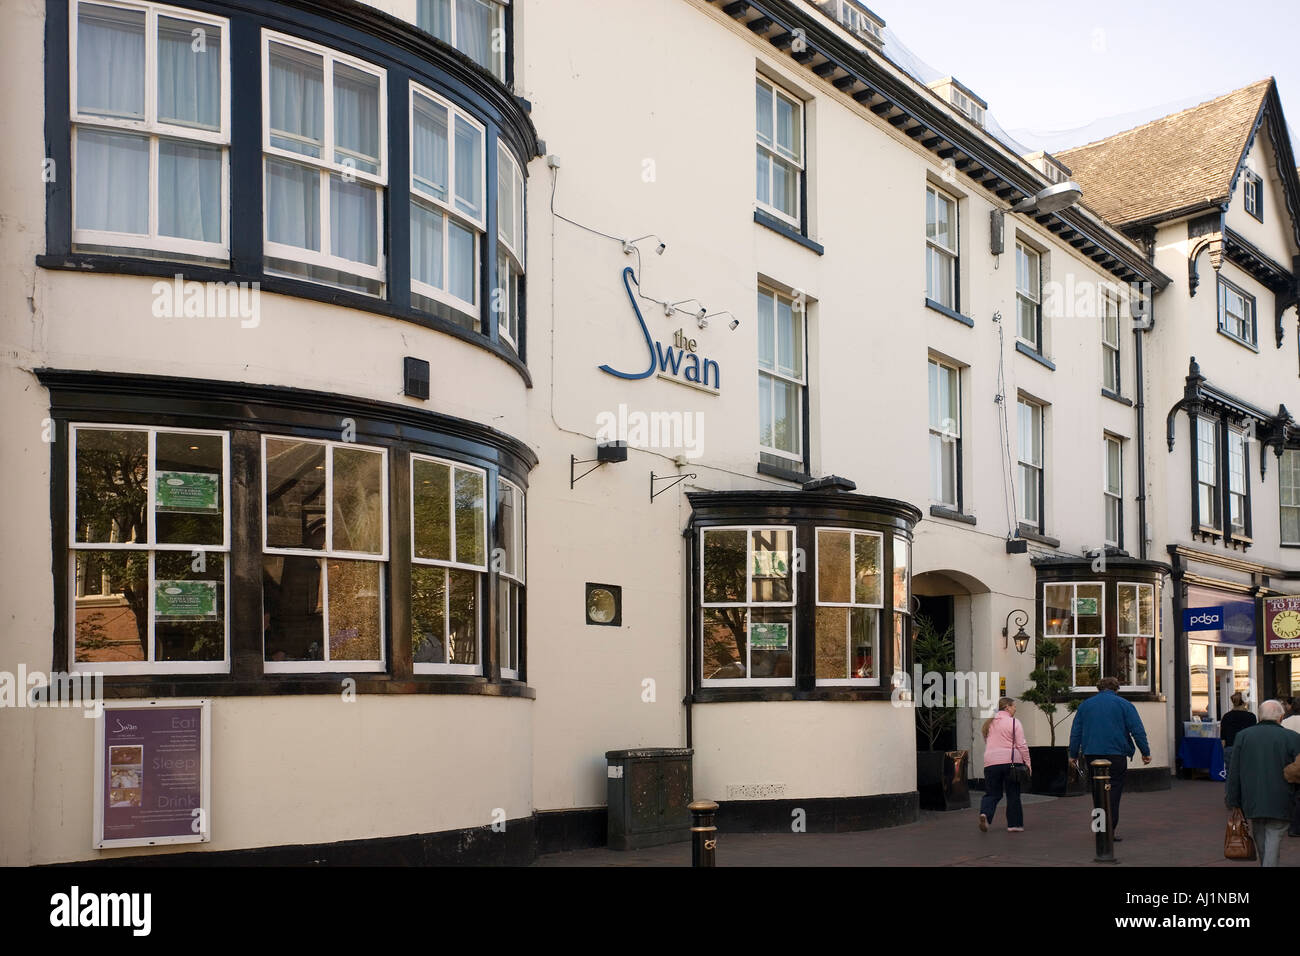 The Swan Hotel, Stafford, Staffordshire, England Stock Photo